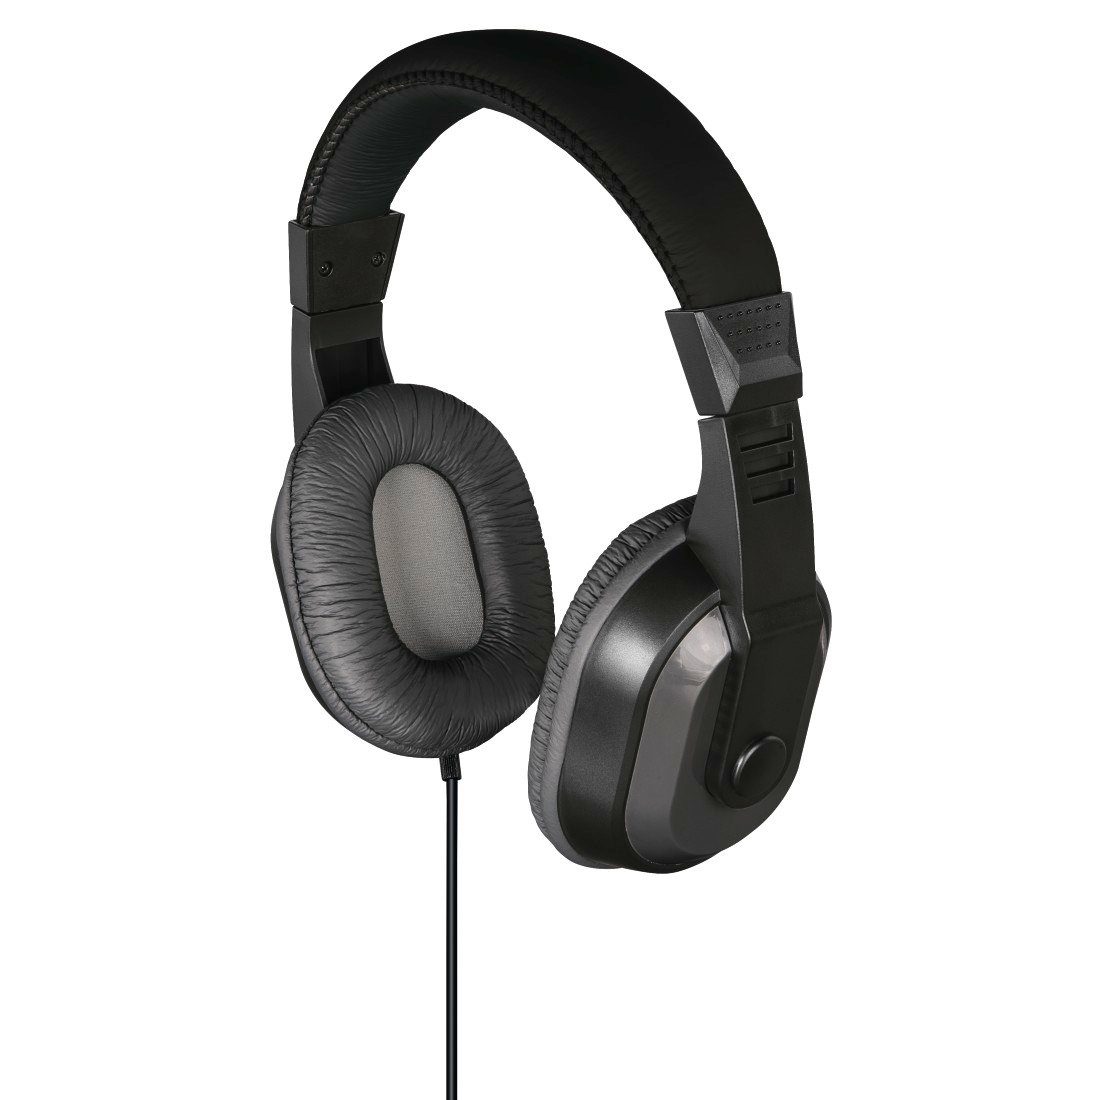 Thomson Kopfhörer mit Klang) (Geräuschisolierung, Geräuschreduzierung, passiver guter schwarz Over angenehmer Ear Tragekomfort, Over-Ear-Kopfhörer